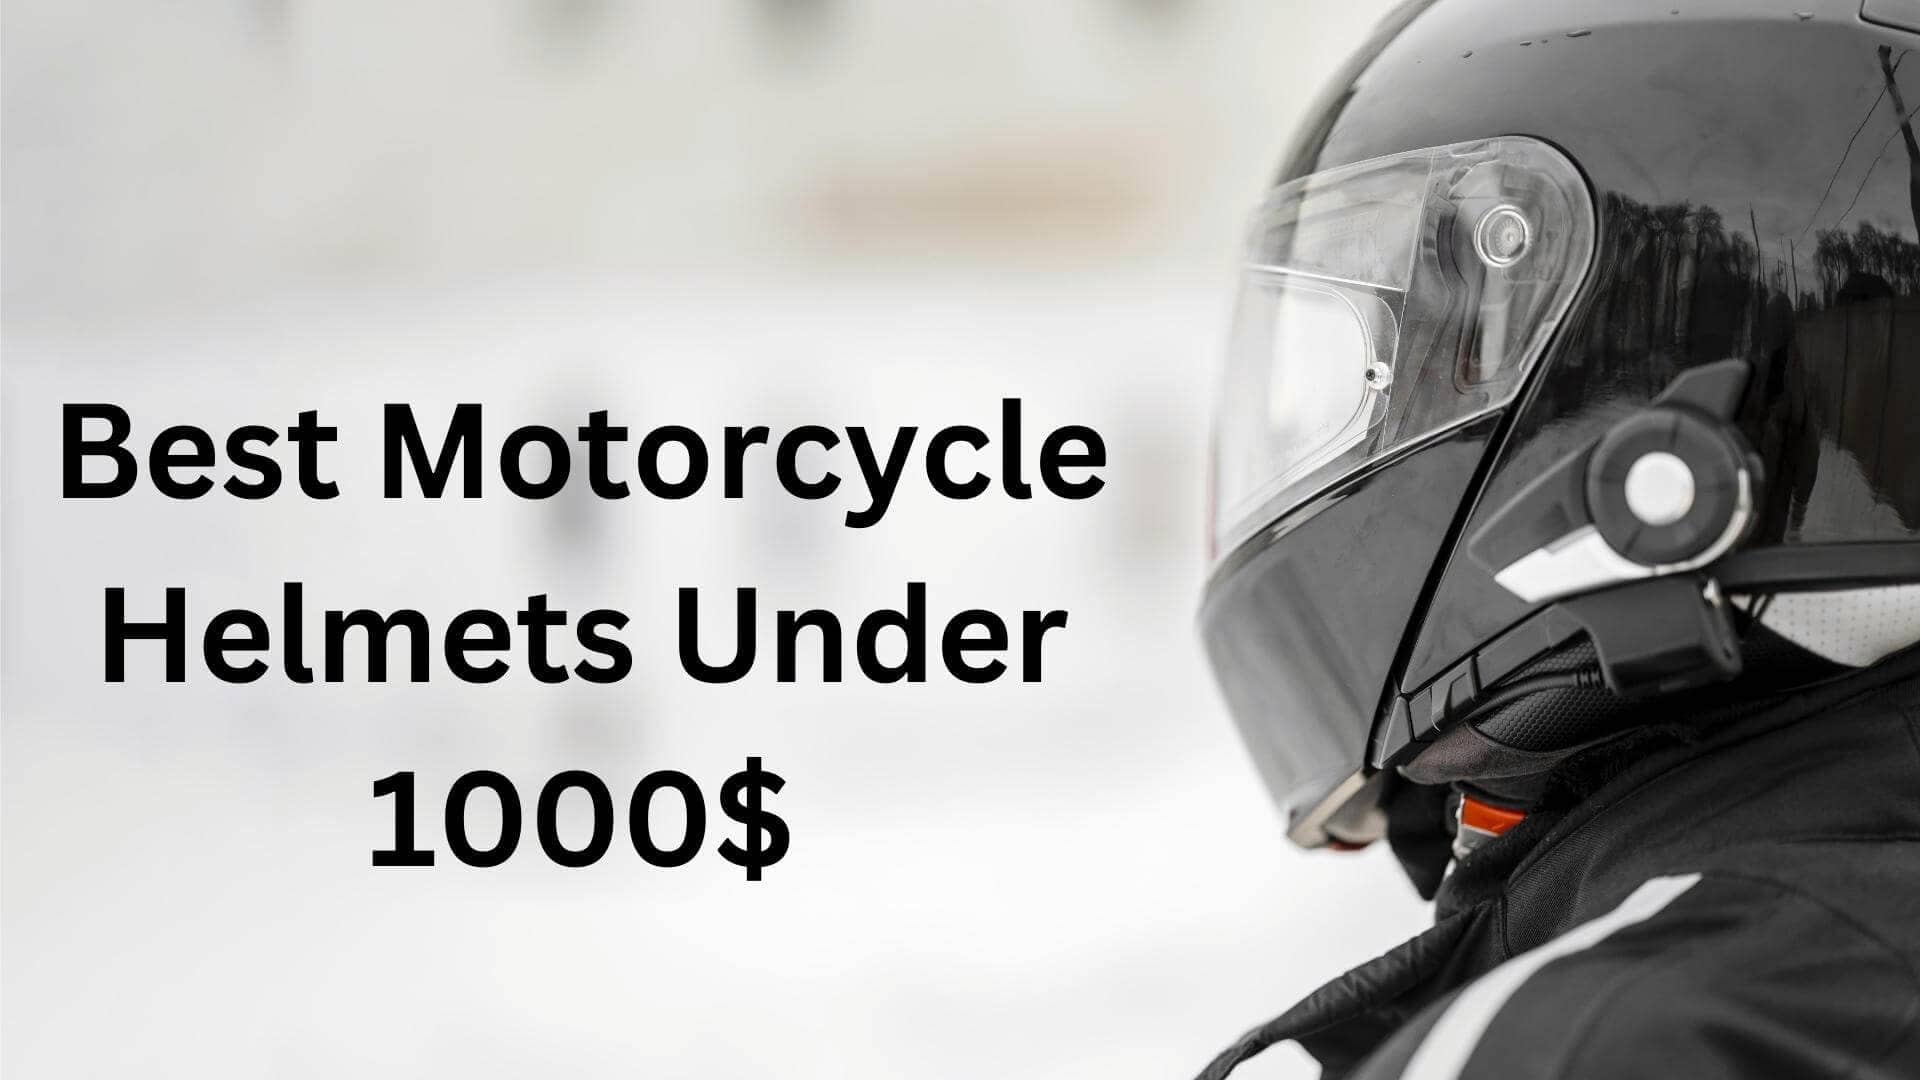 Top 5 Best Motorcycle Helmet Under 1000 Dollars!